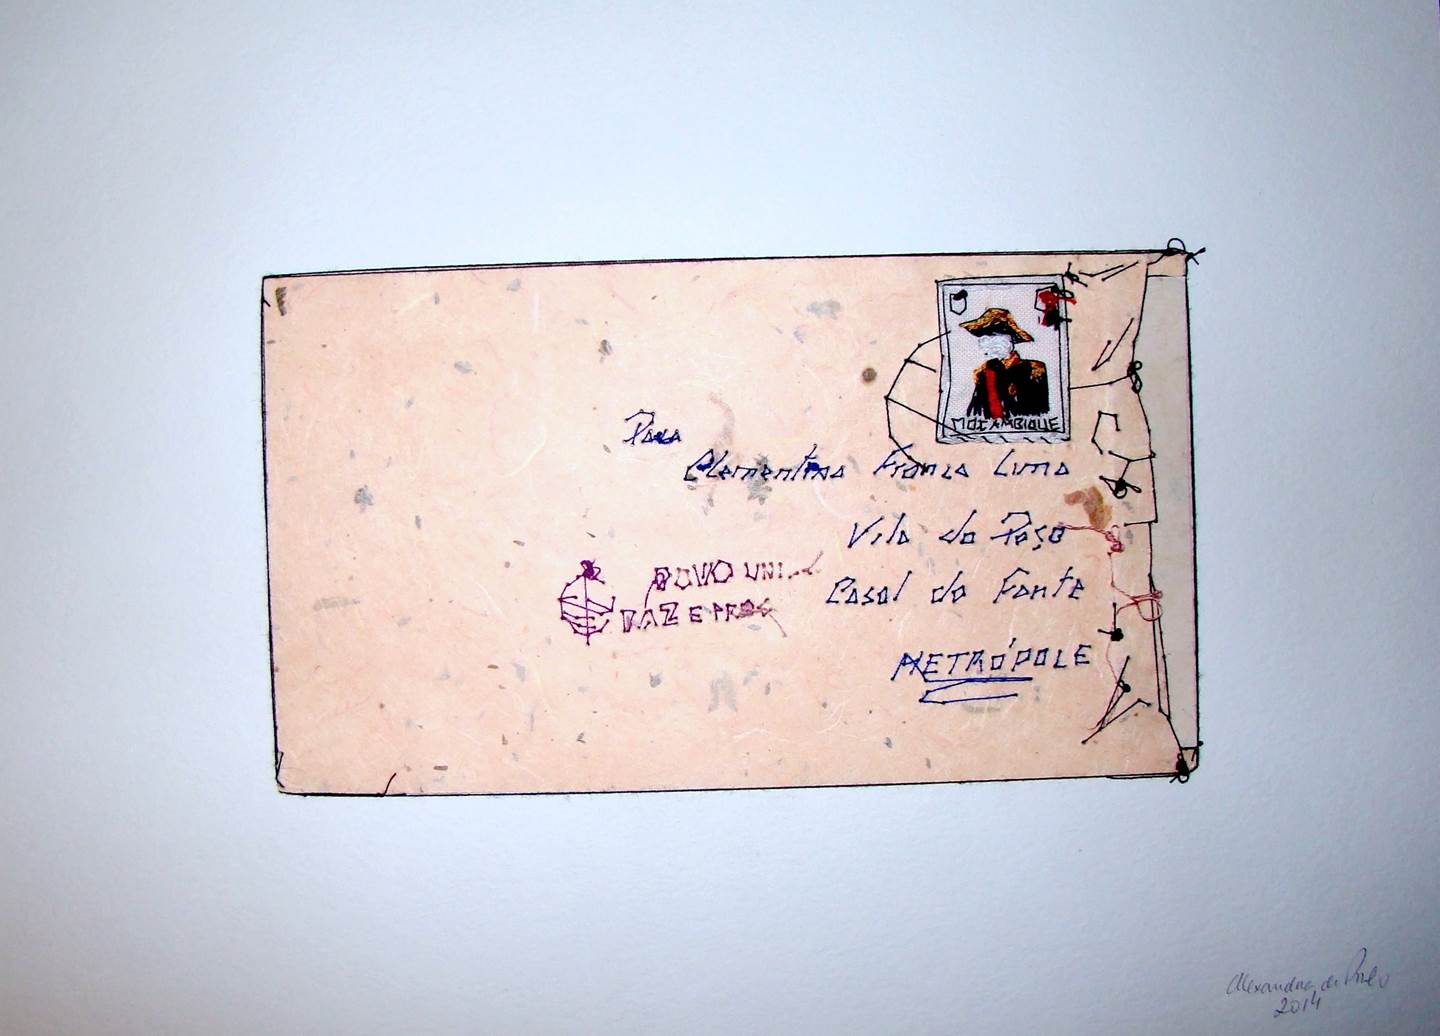 Carta de Moçambique, original Minimalist Paper Drawing and Illustration by Alexandra de Pinho